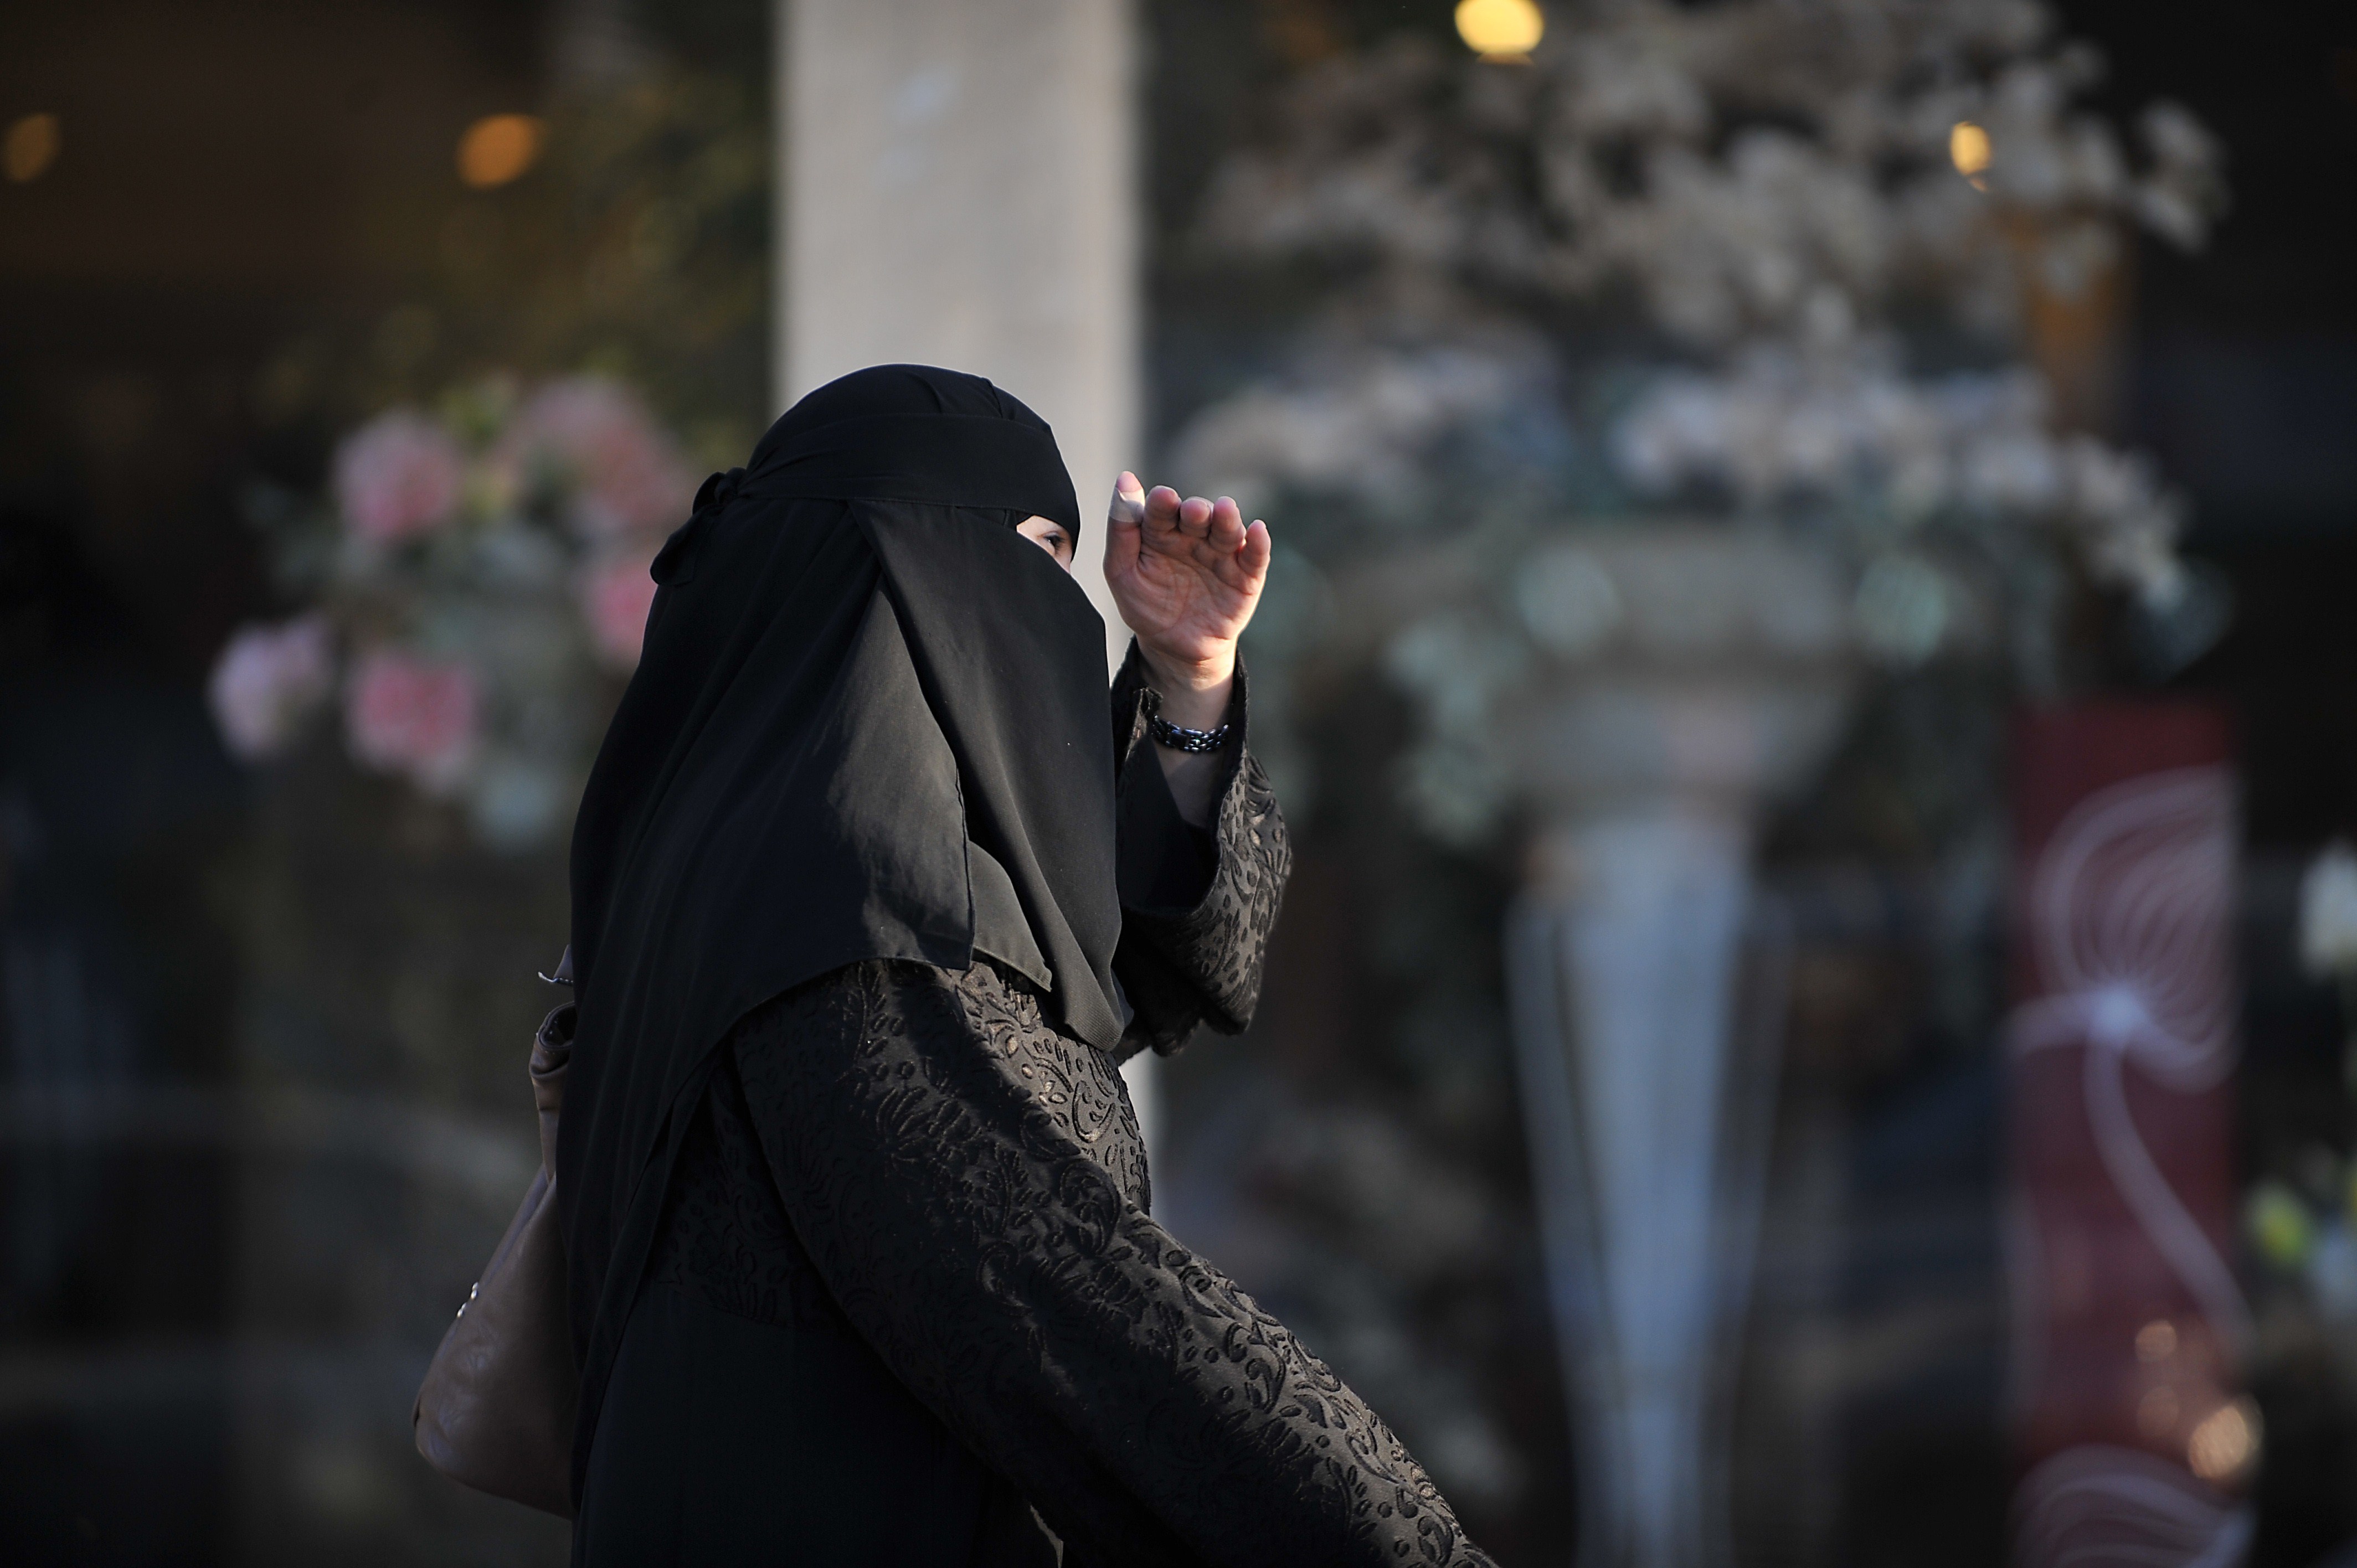 A Saudi woman walks past a flower shop in Riyadh, Saudi Arabia on February 13, 2014. (Fayez Nureldine—AFP/Getty Images)